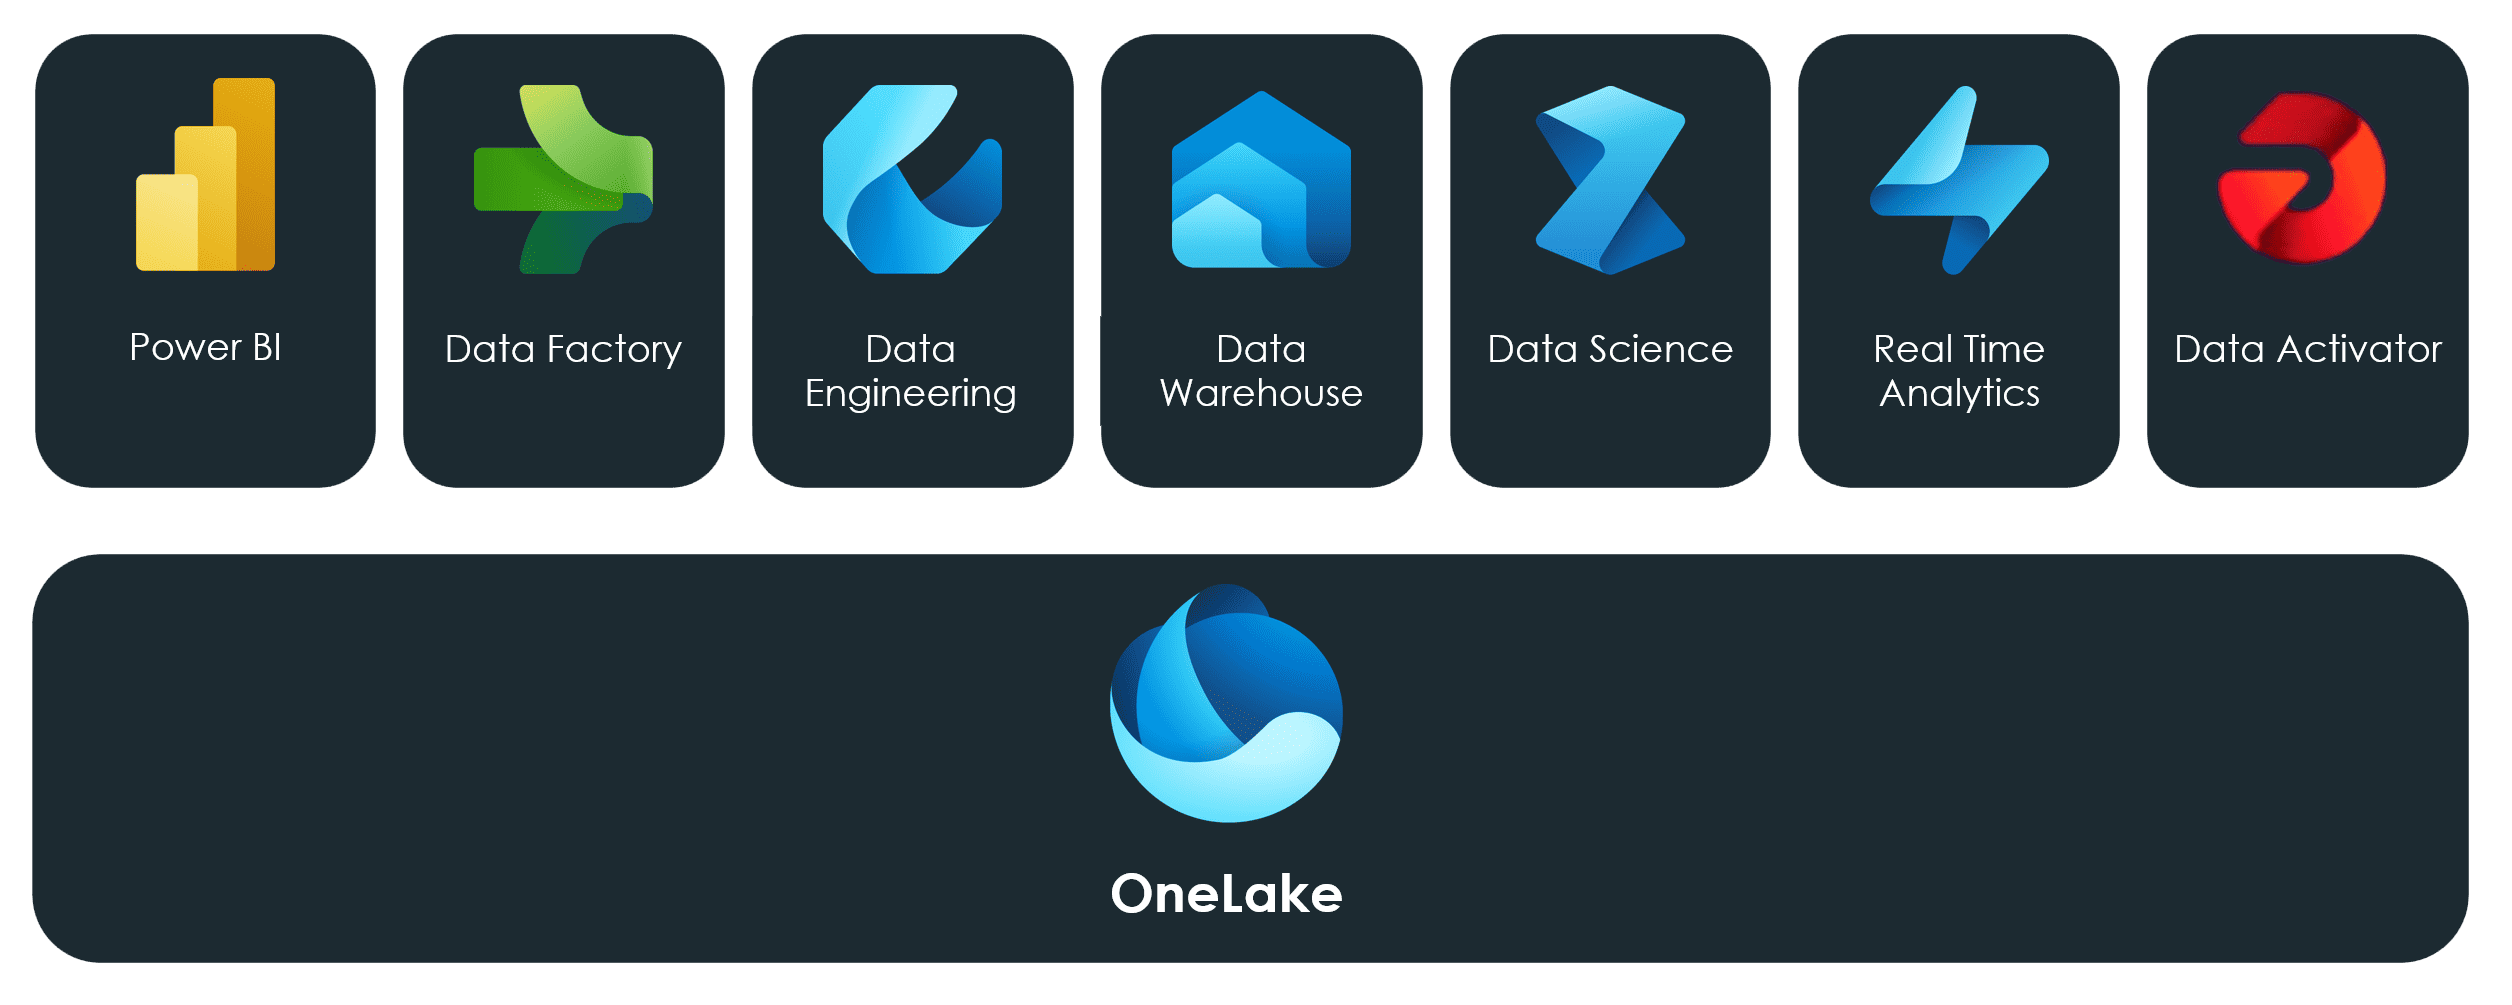 Microsoft Fabric supports OneLake